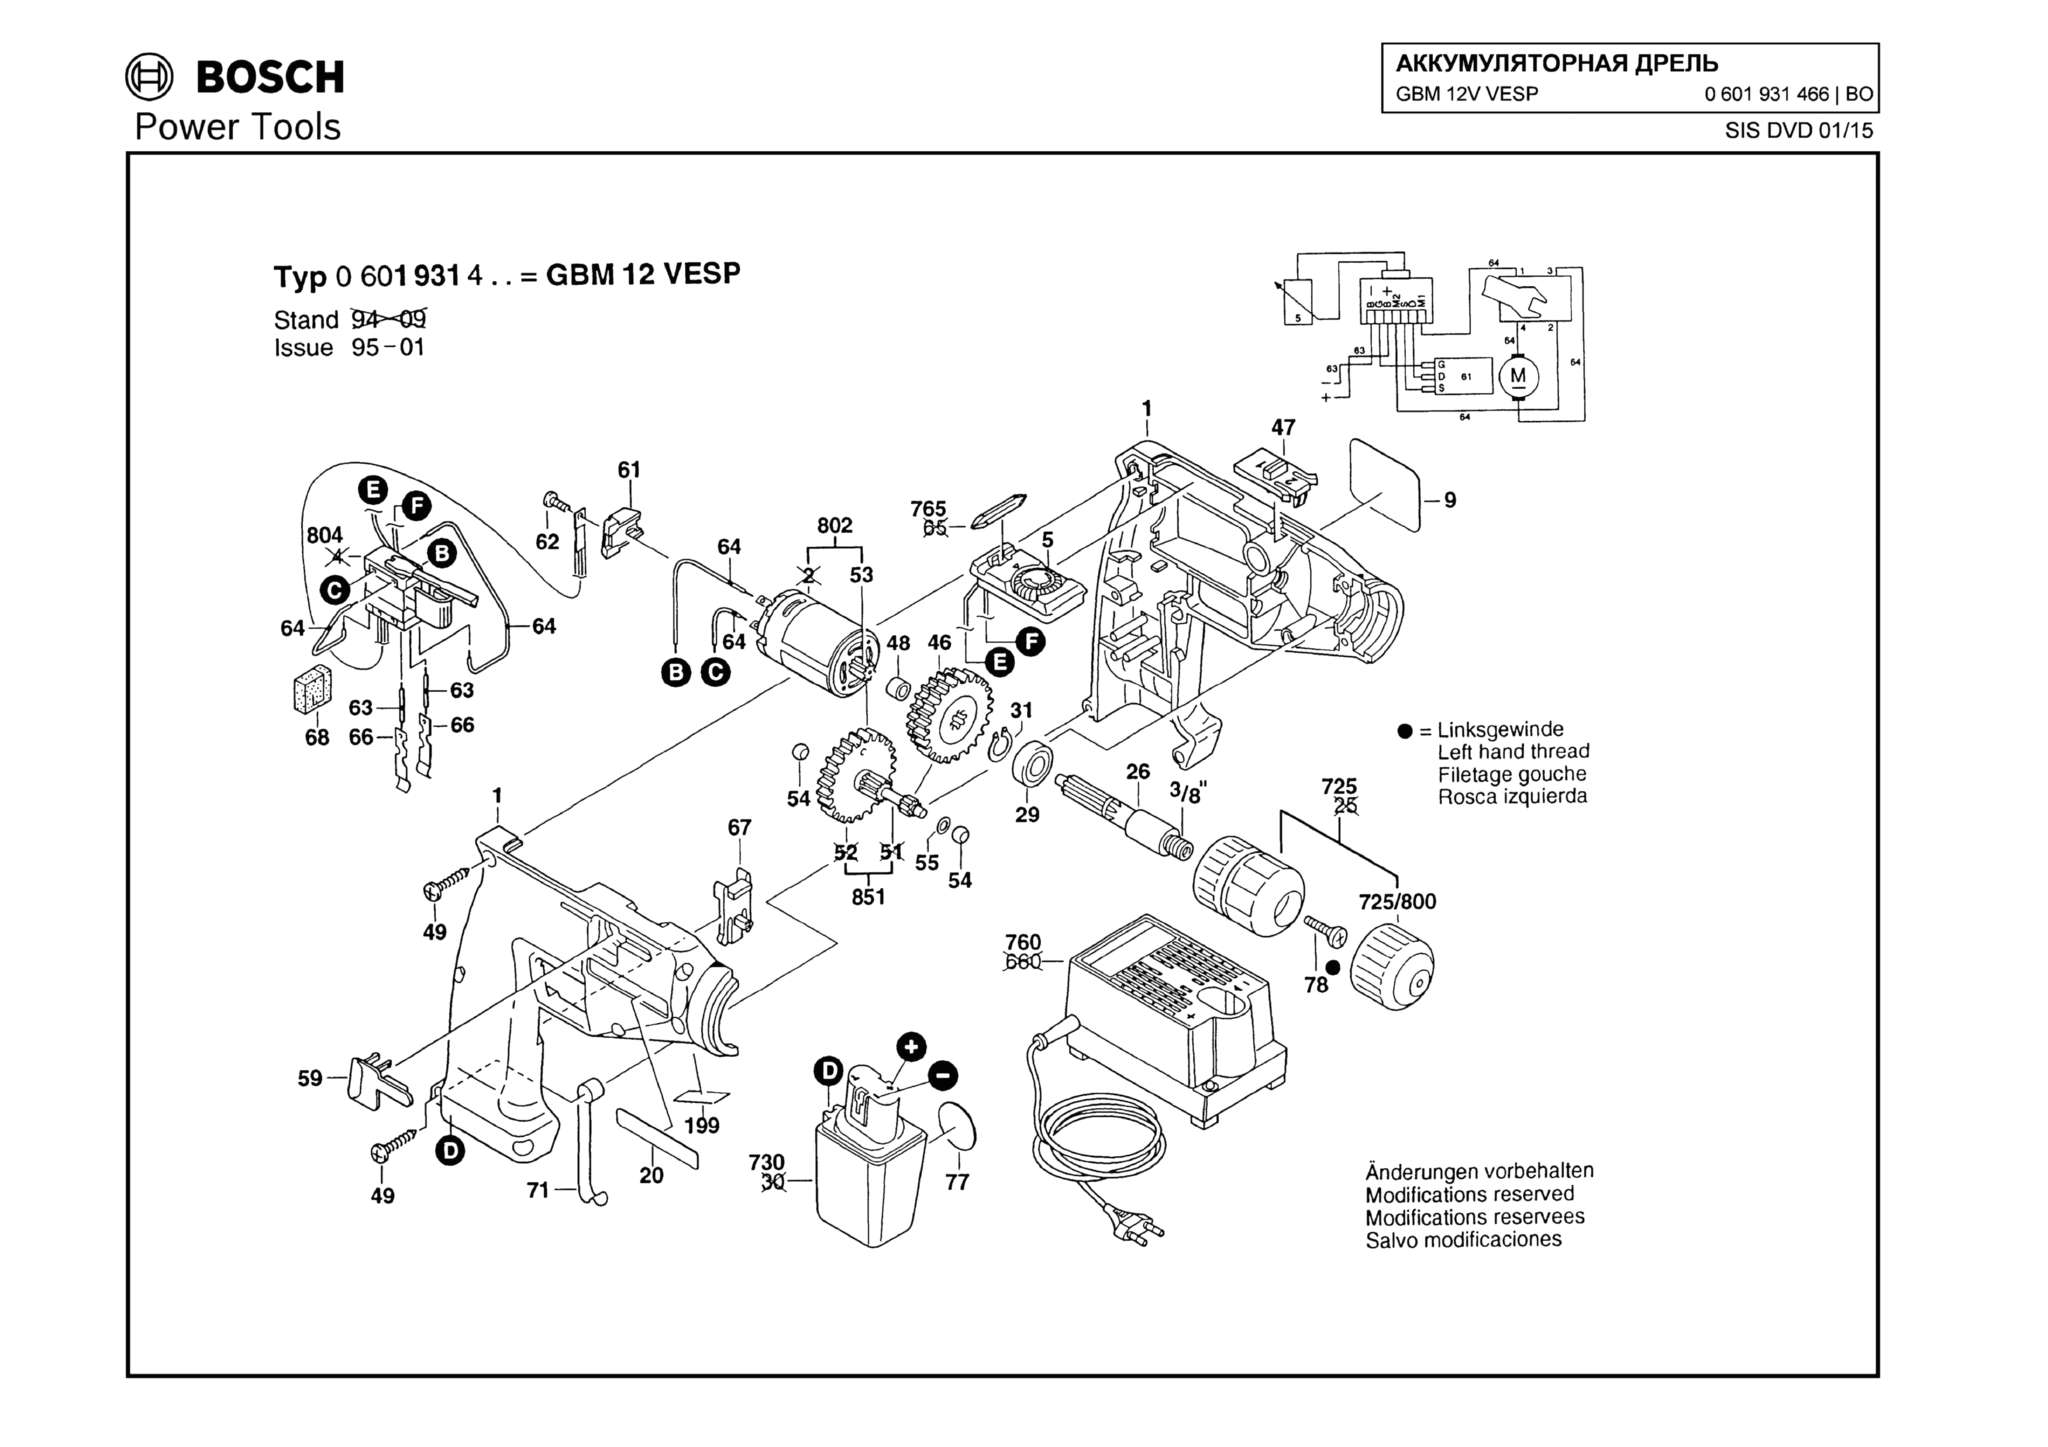 Запчасти, схема и деталировка Bosch GBM 12V VESP (ТИП 0601931466)